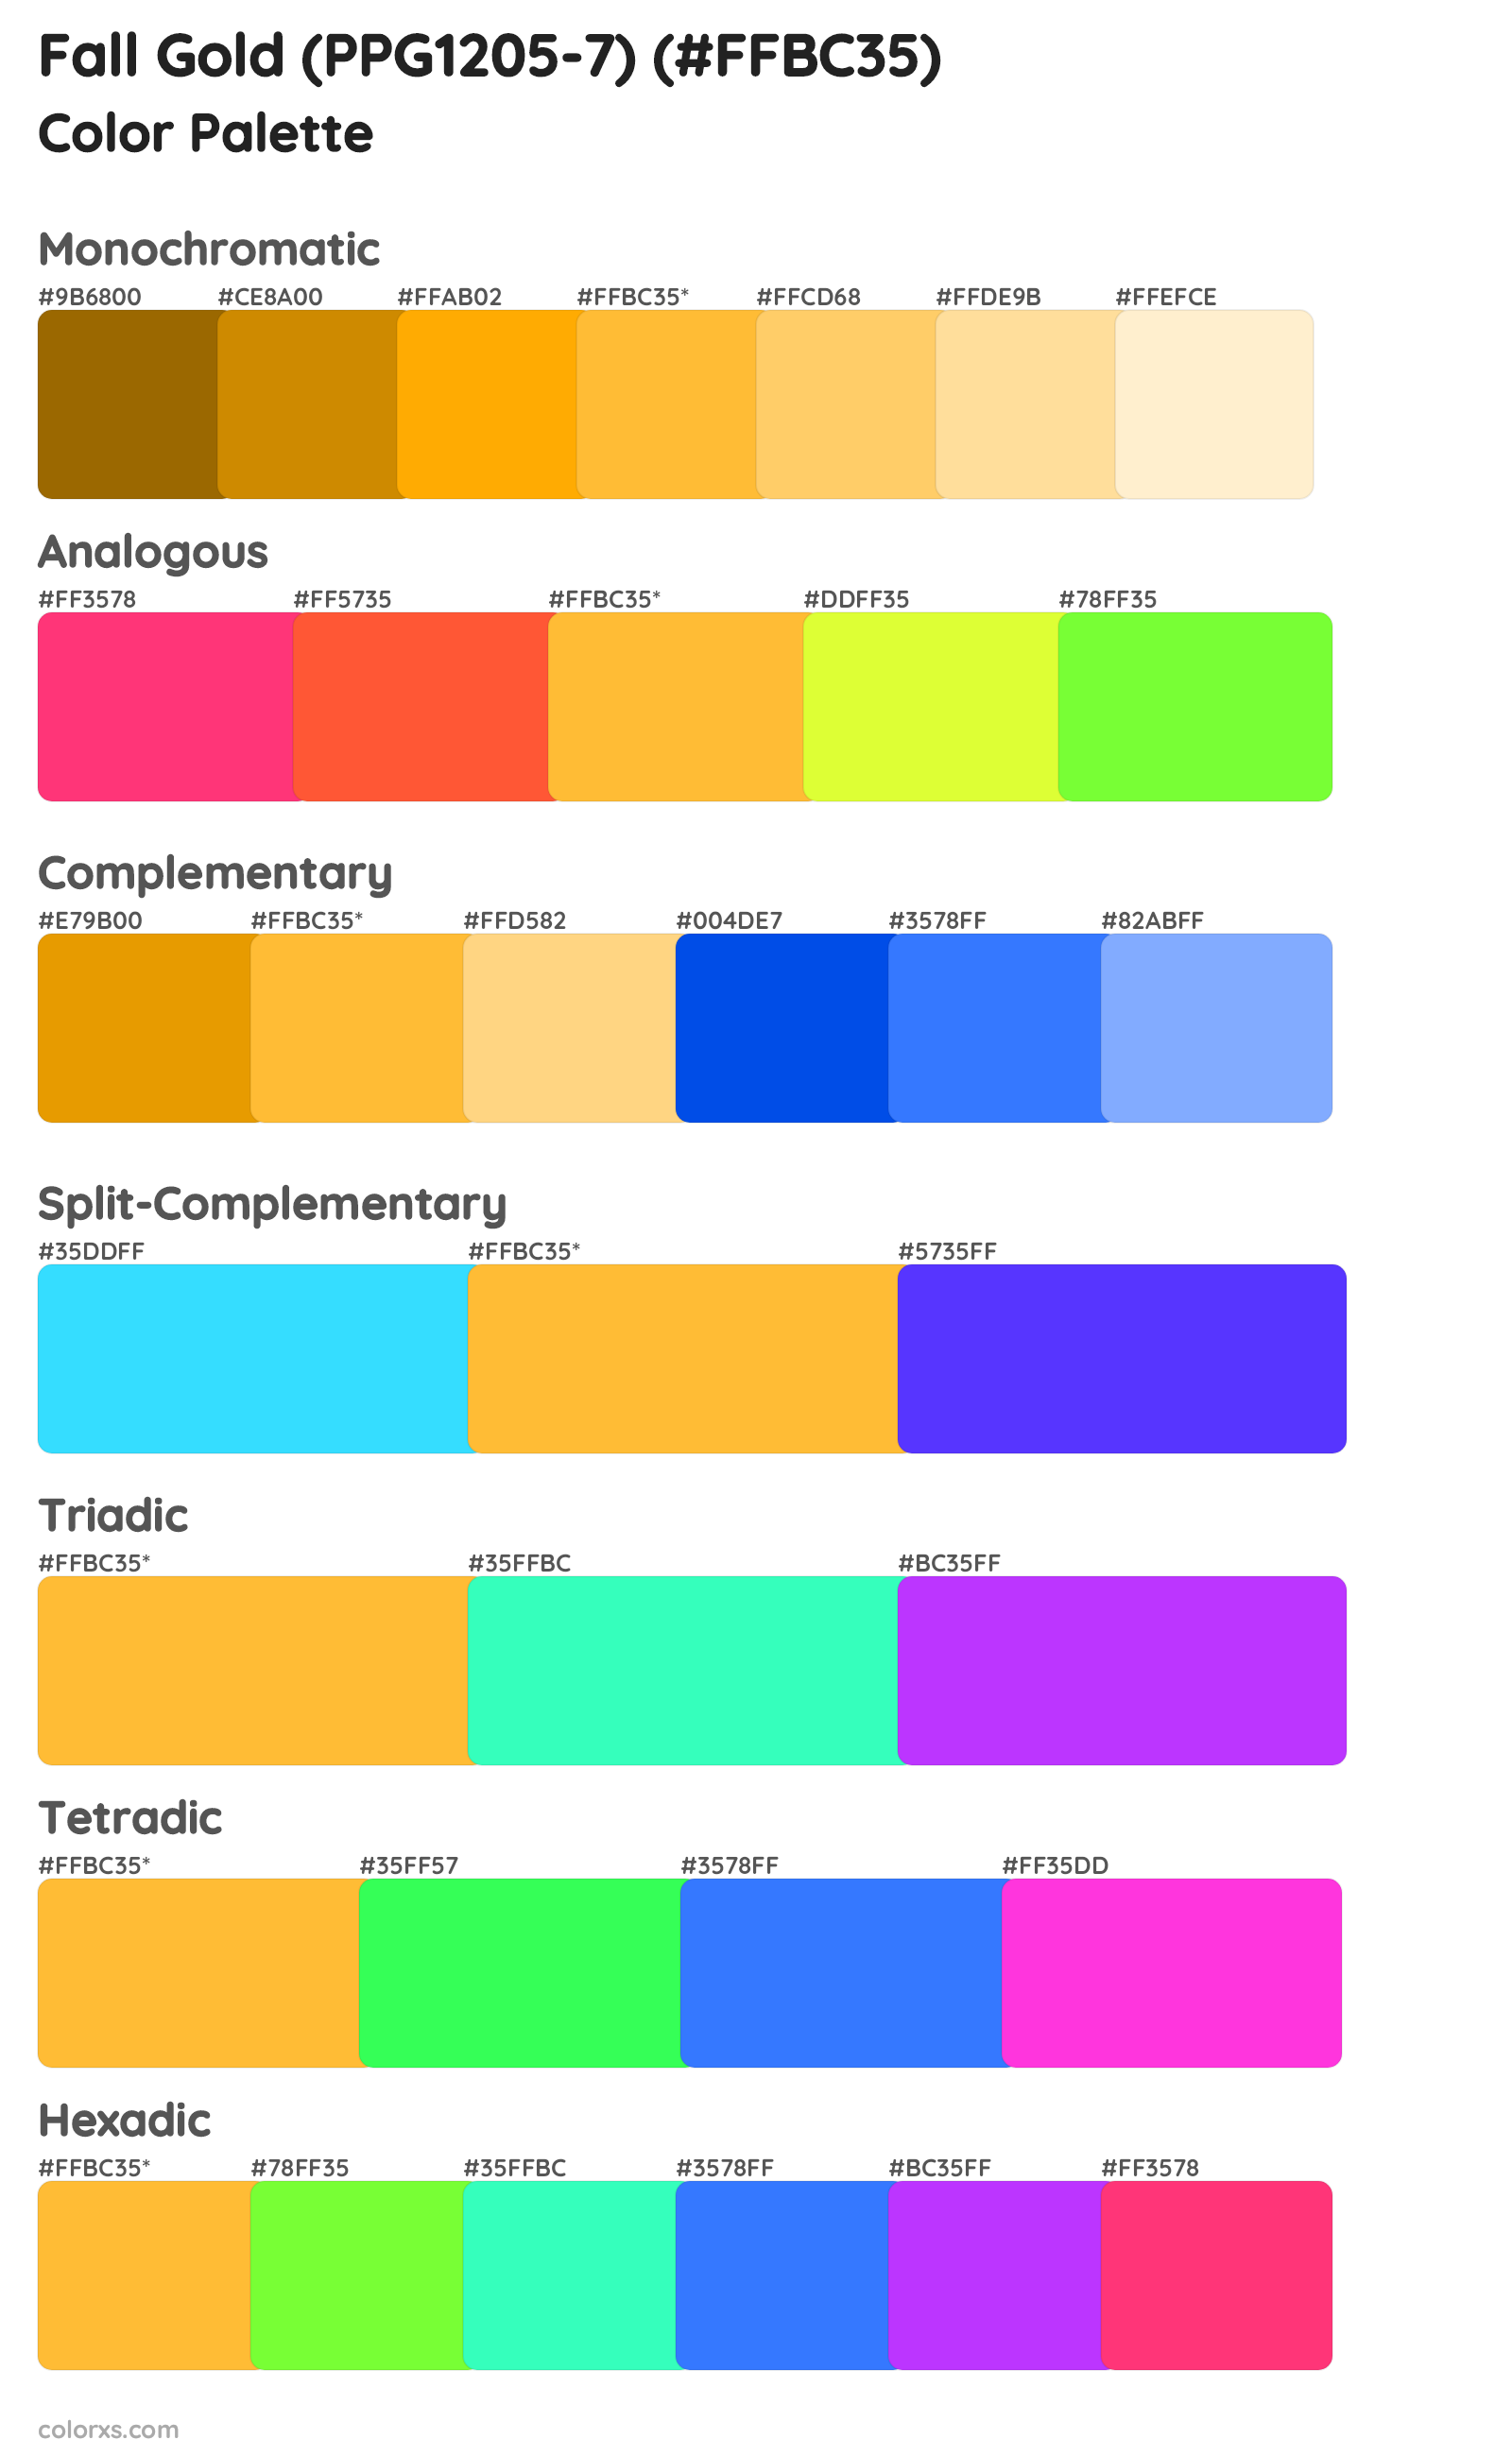 Fall Gold (PPG1205-7) Color Scheme Palettes